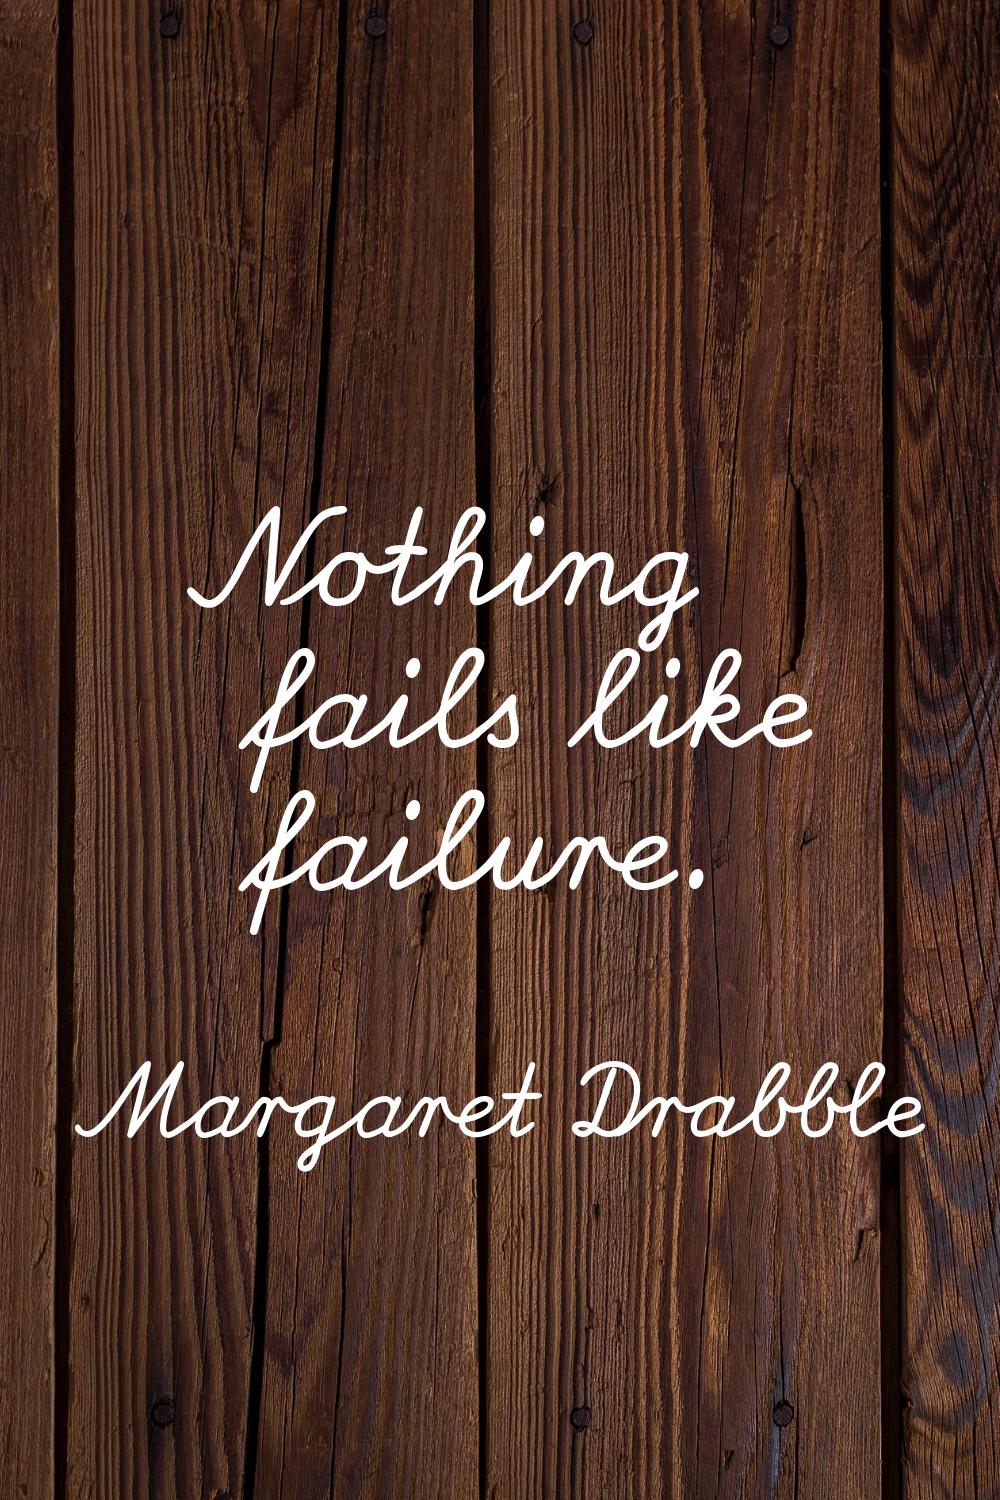 Nothing fails like failure.